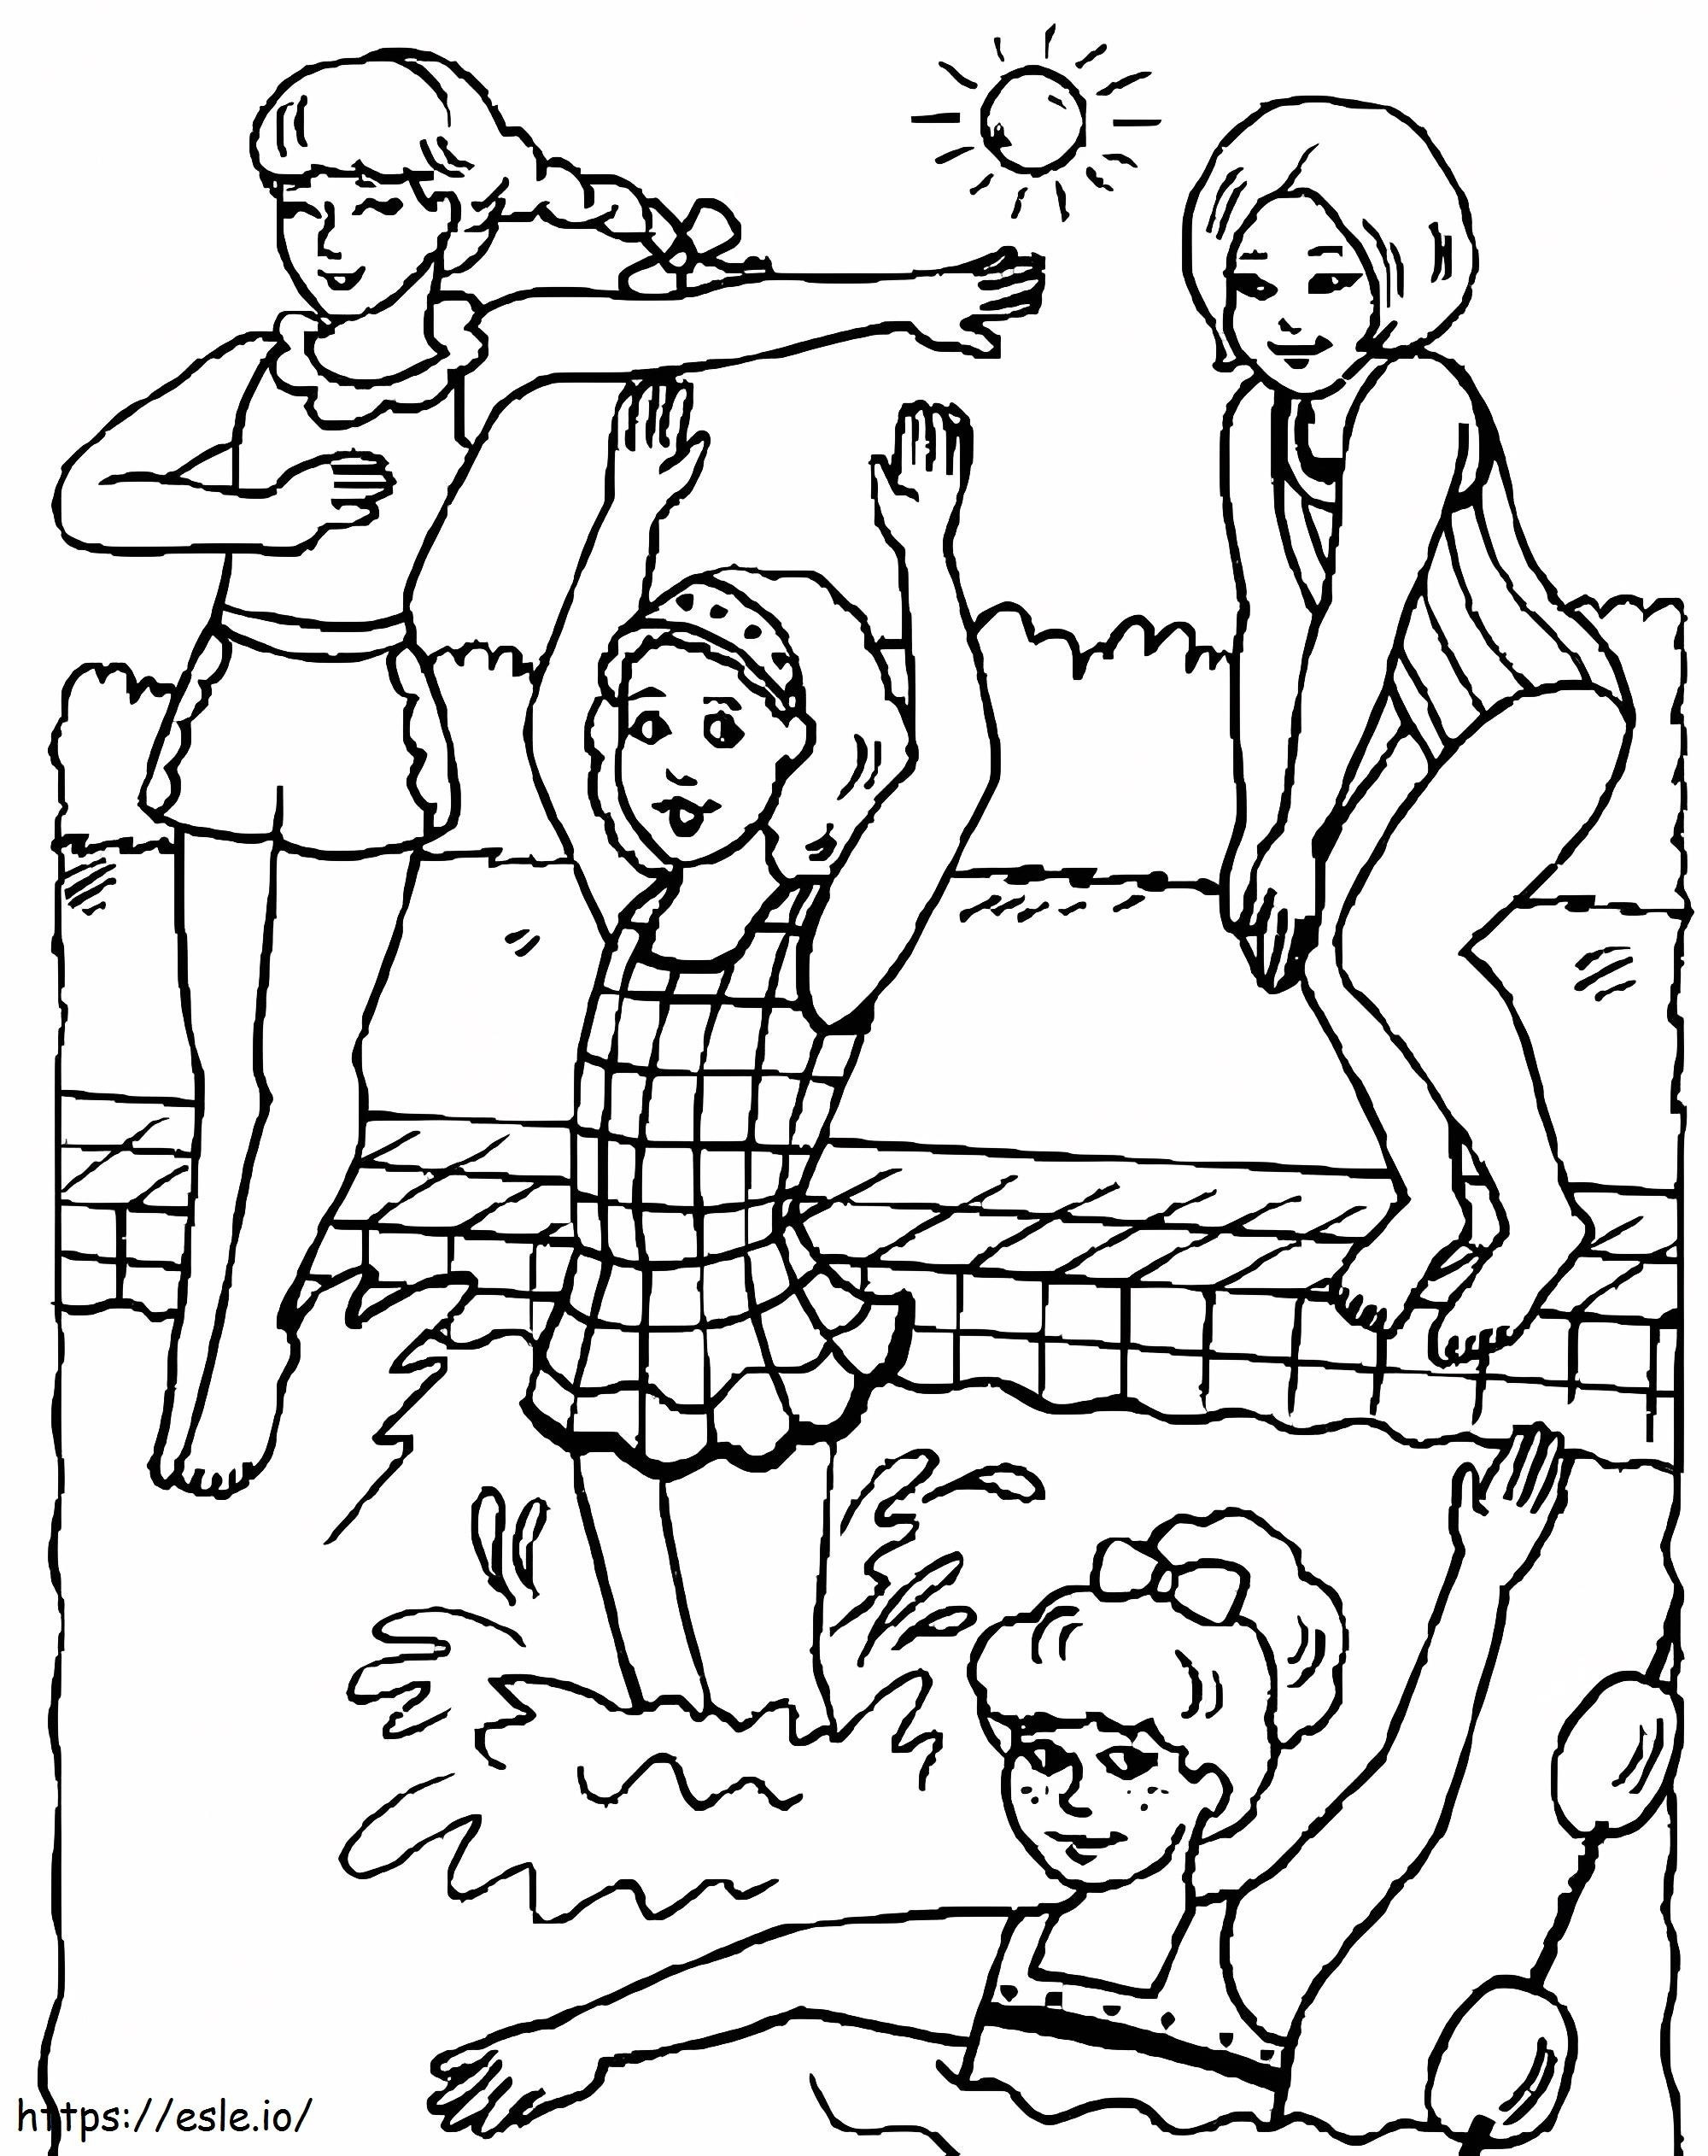 Girls In Pool kifestő